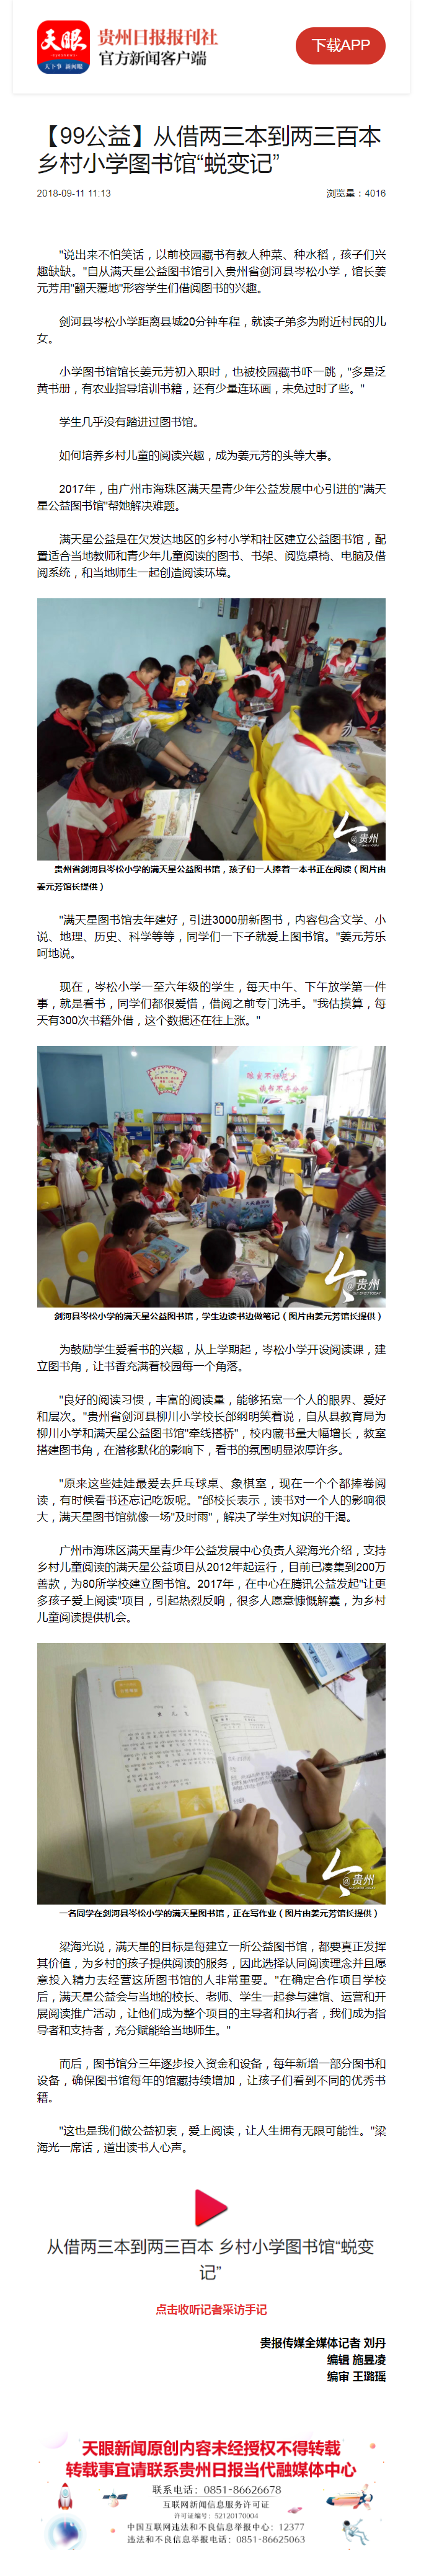 FireShot Capture 162 - 【99公益】从借两三本到两三百本 乡村小学图书馆“蜕变记” - jgz.app.todayguizhou.png